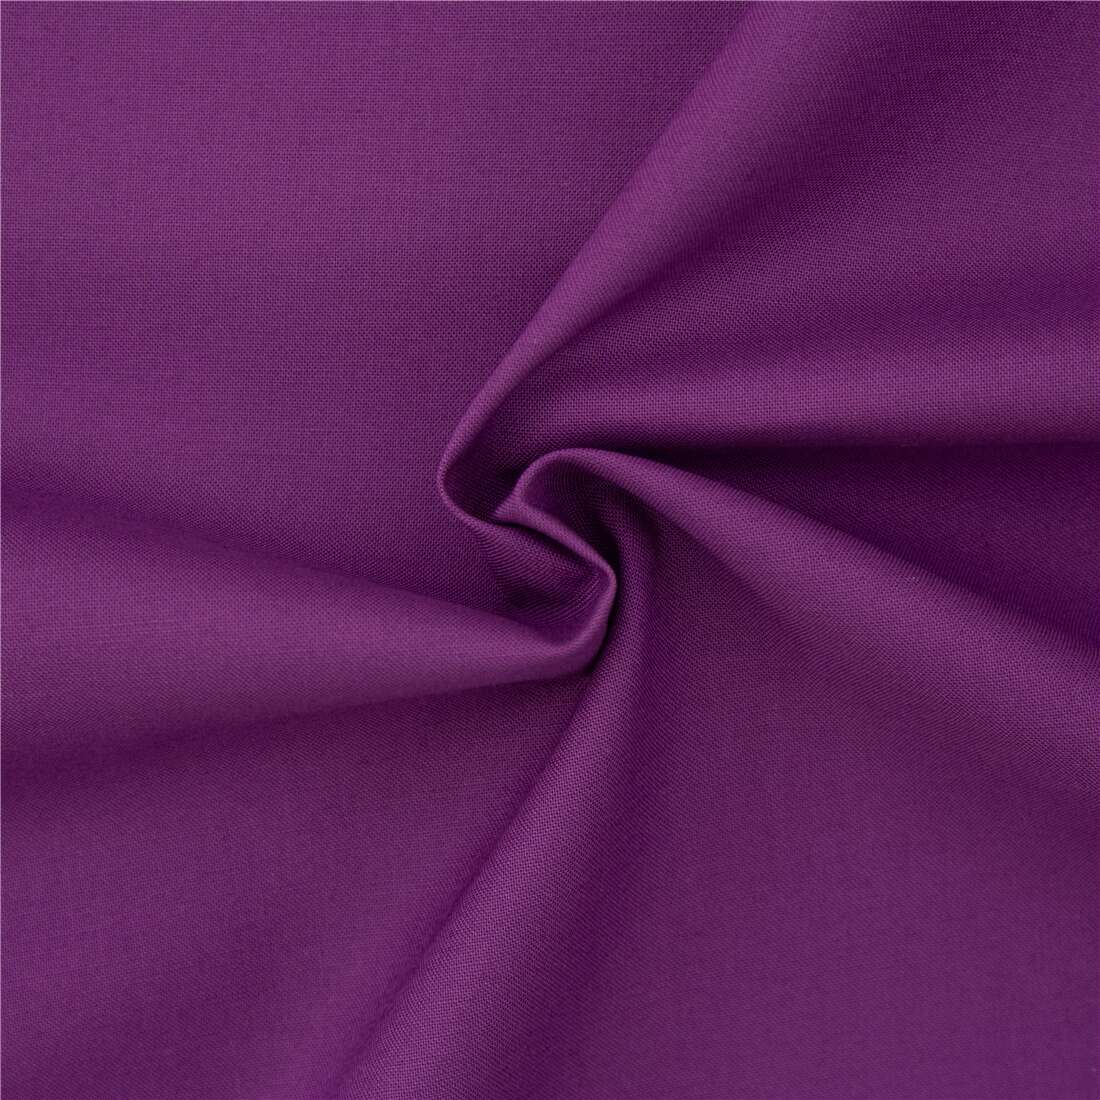 Robert Kaufman Fabrics - Plum from Violet Craft Modern Classics – Chateau  Sew & Sew